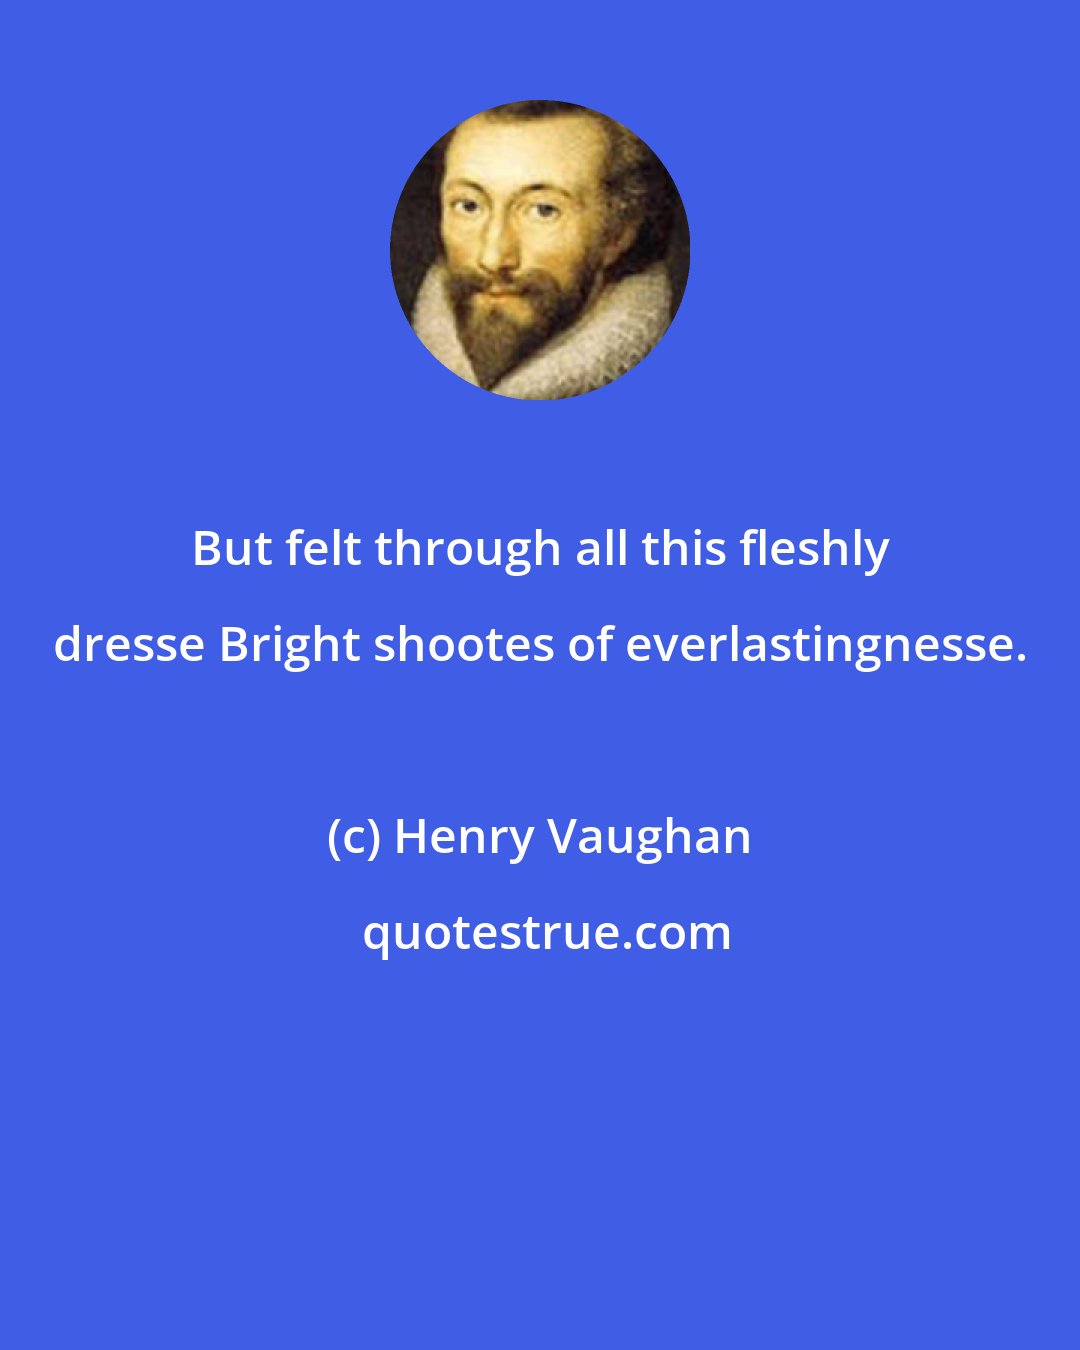 Henry Vaughan: But felt through all this fleshly dresse Bright shootes of everlastingnesse.